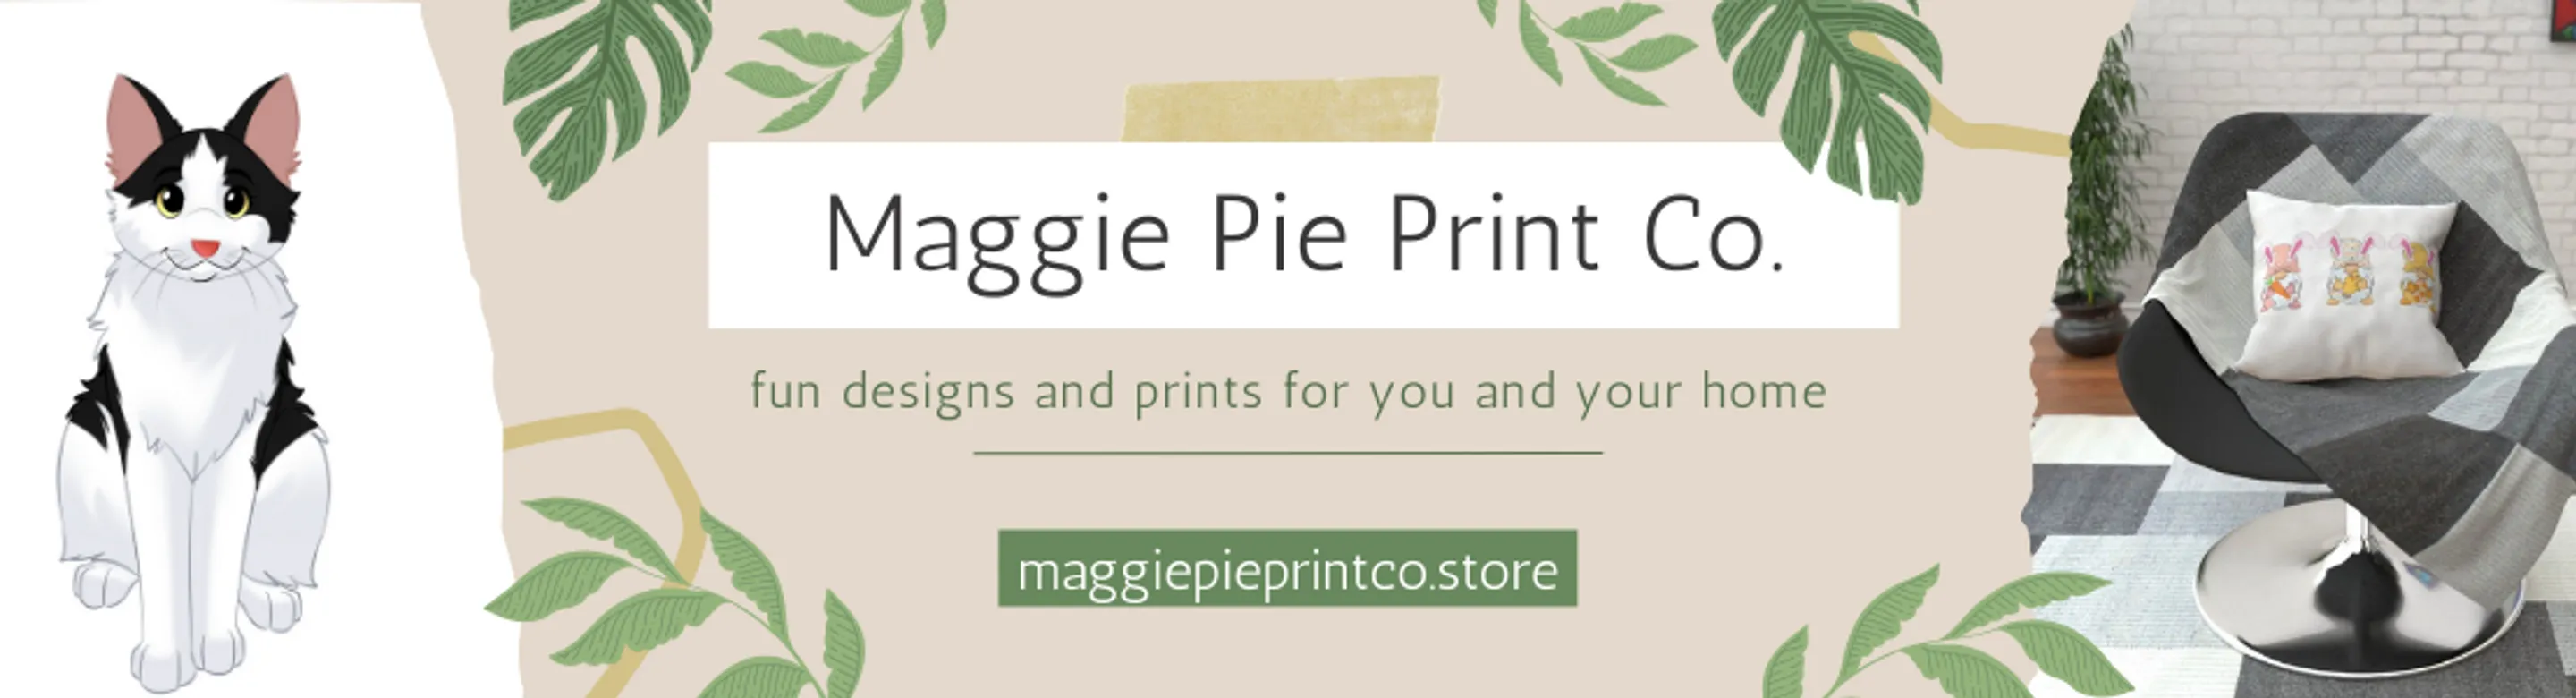 Maggie Pie Print Co